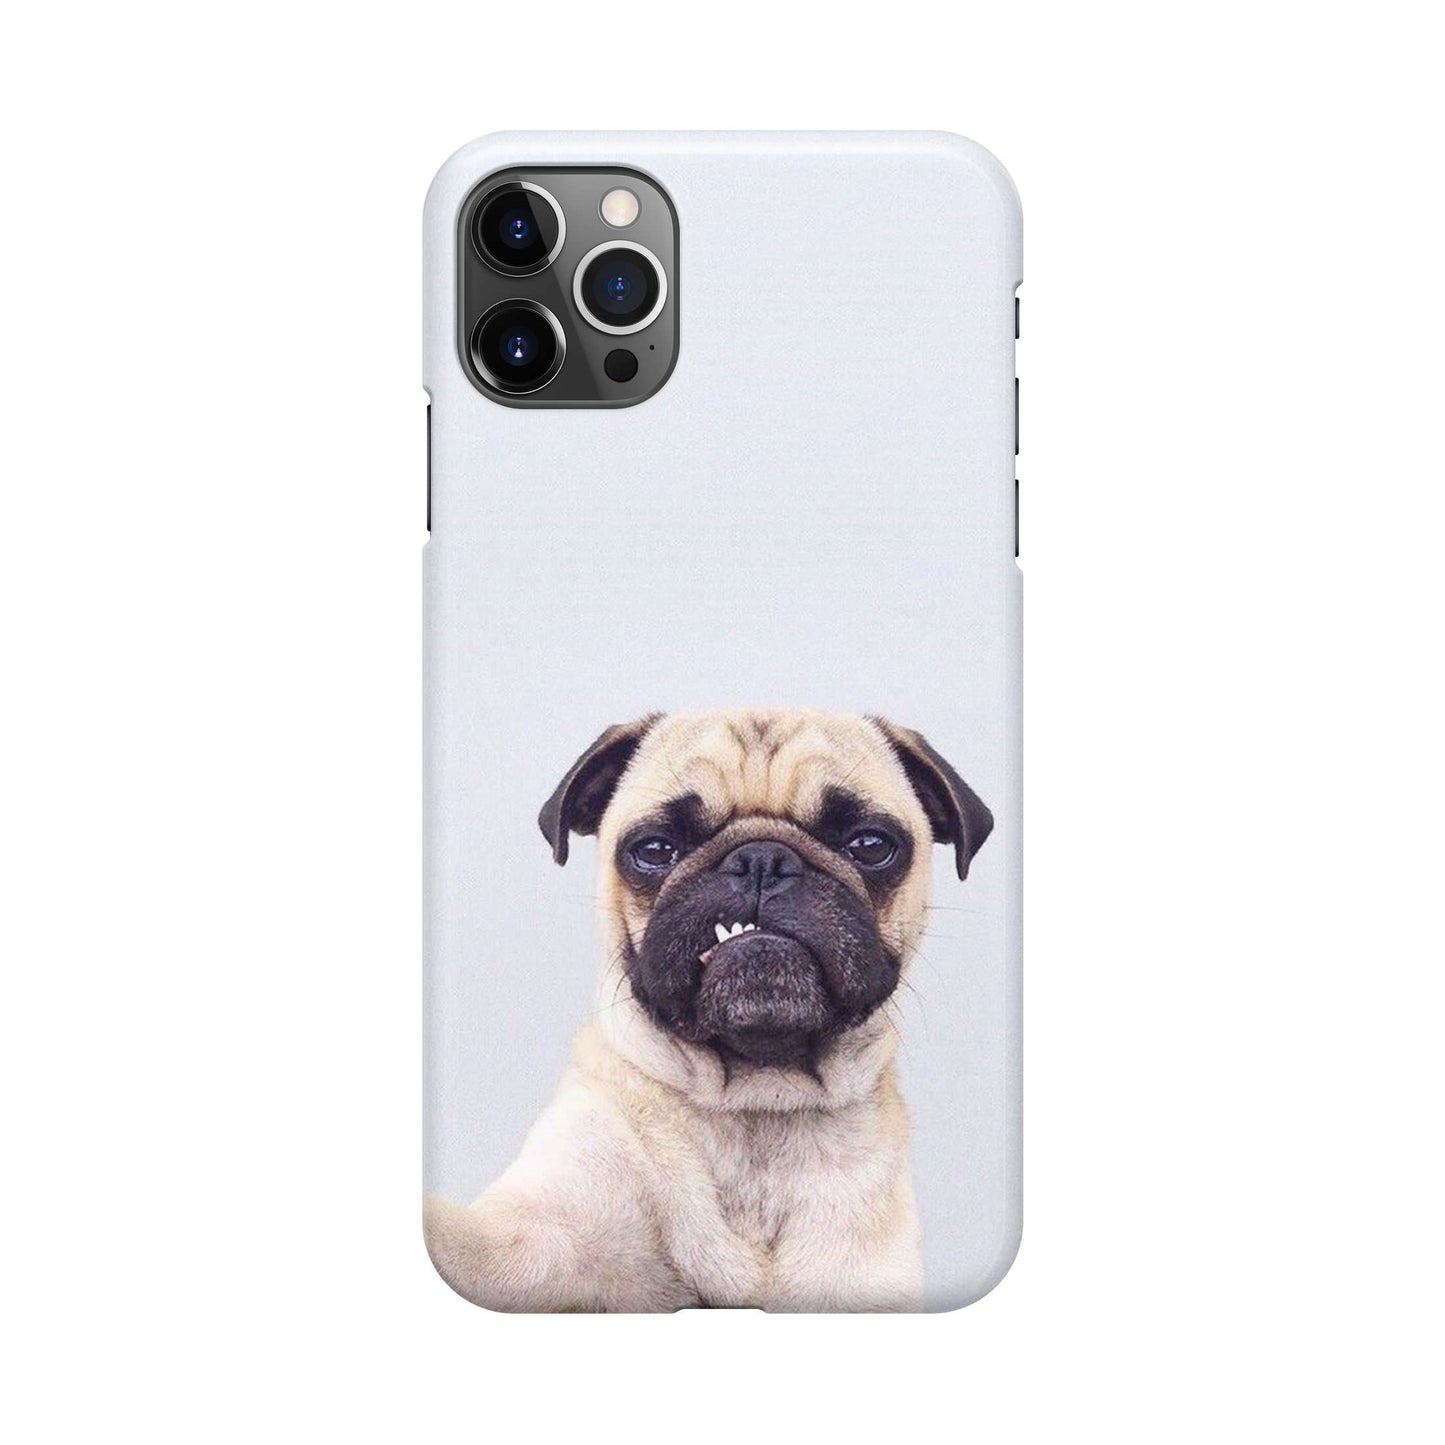 The Selfie Pug iPhone 12 Pro Case